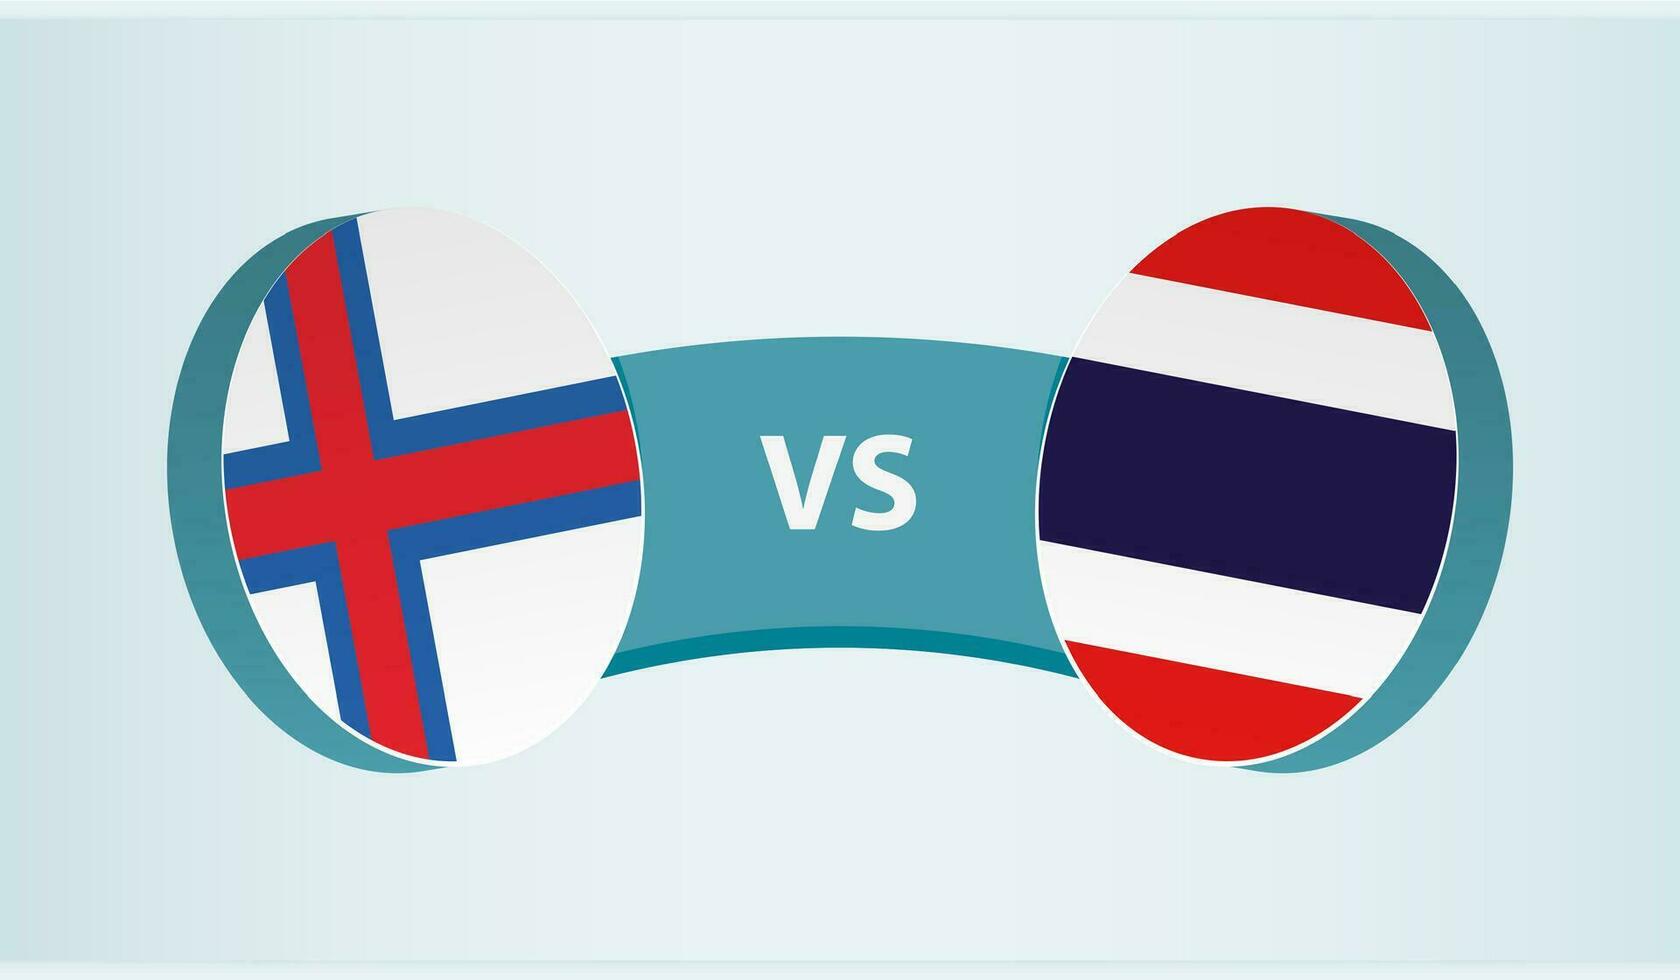 Faroe Islands versus Thailand, team sports competition concept. vector